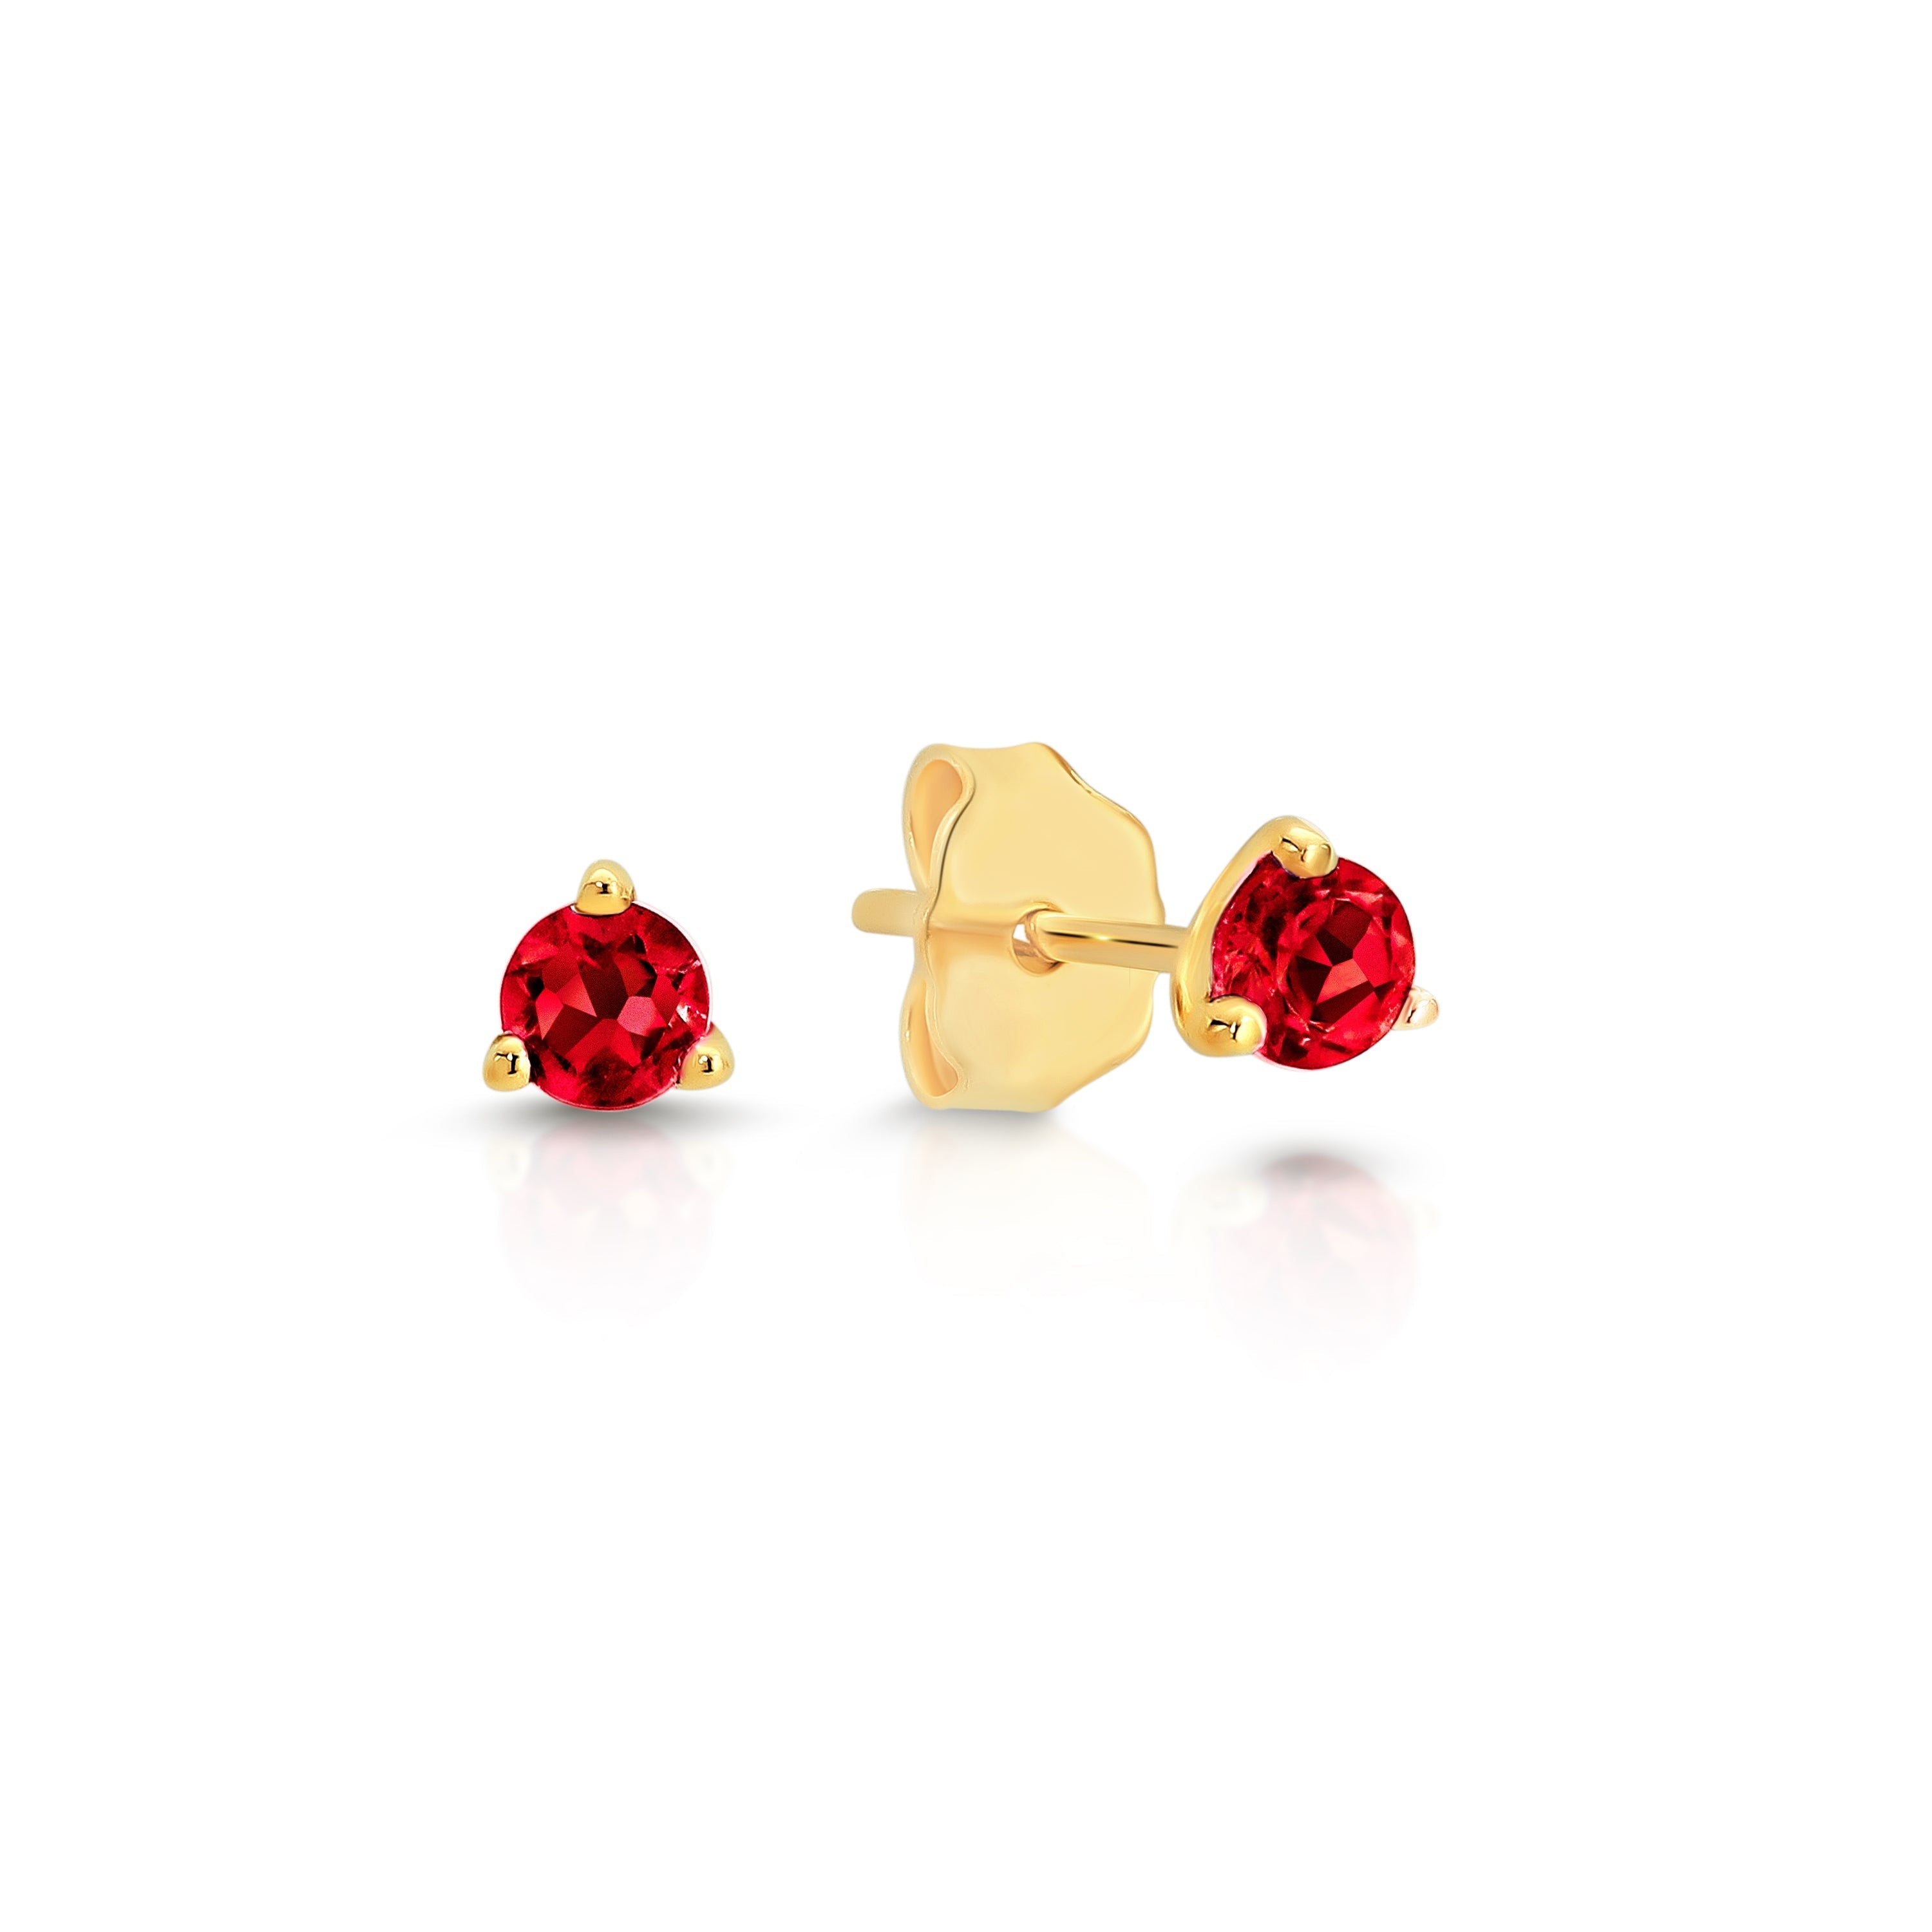 9ct created ruby earrings